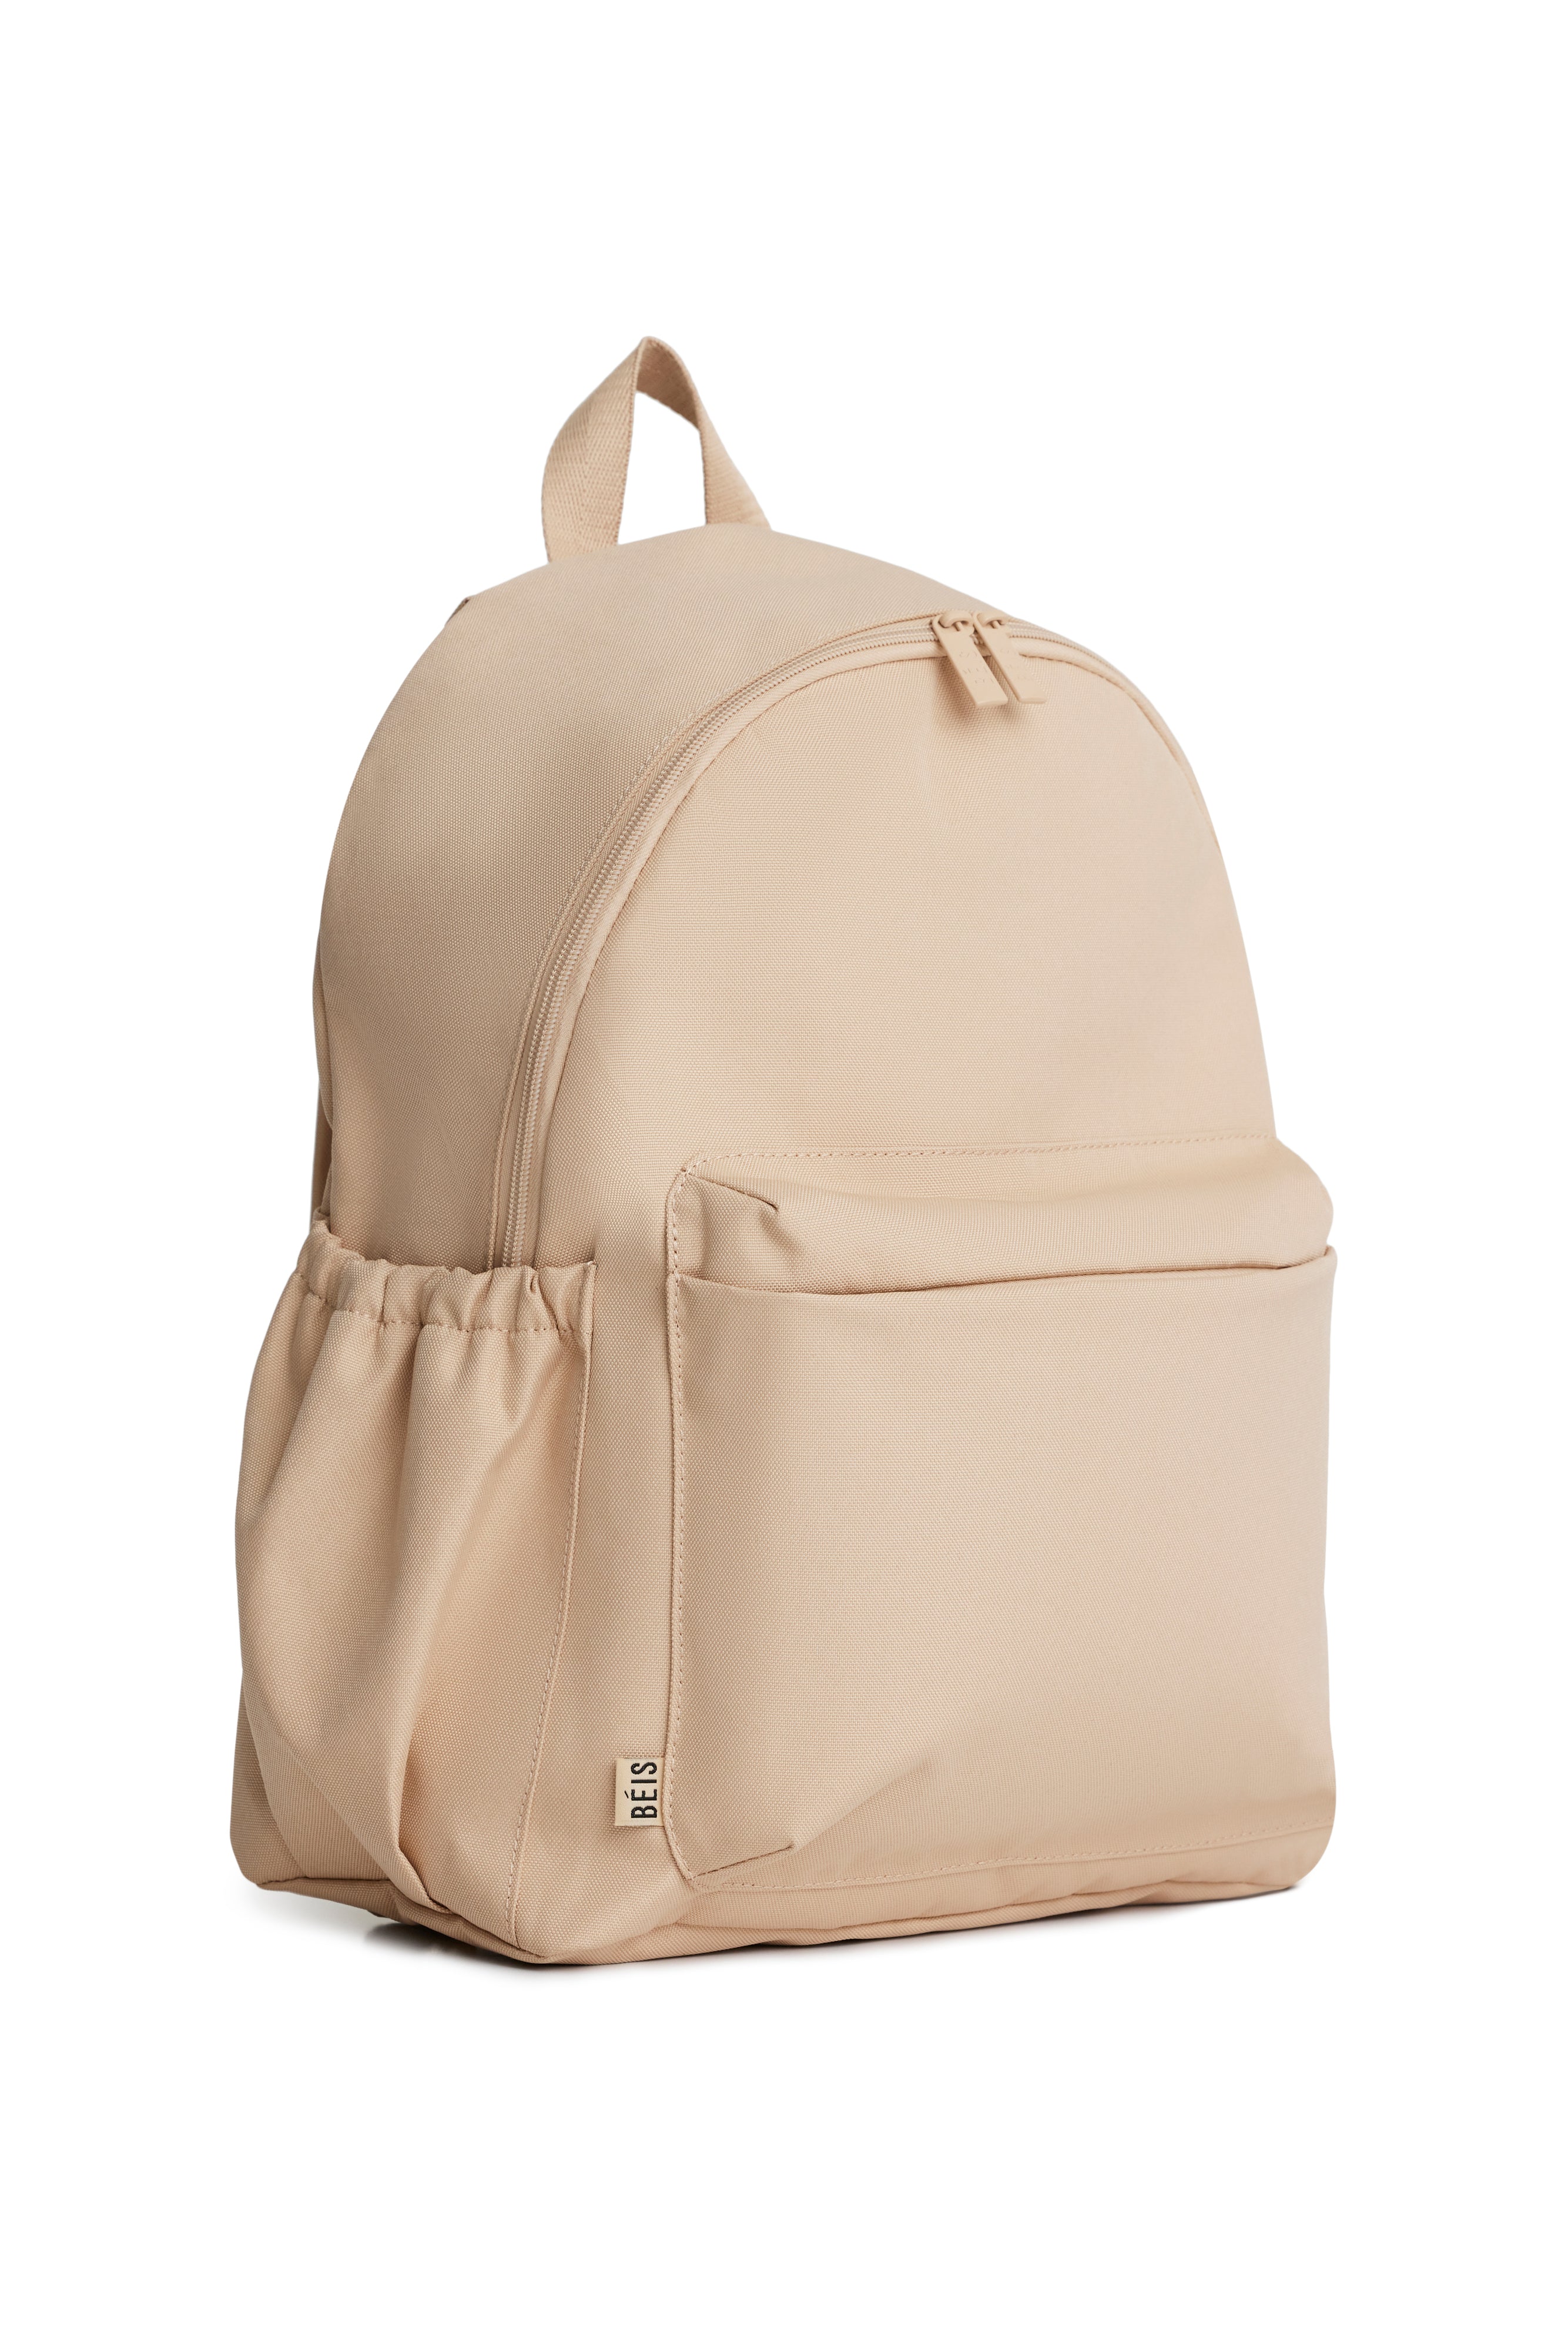 Womens & Girls PU Leather Backpack Purse Fashion Casual Shoulder Bag - Beige  3 - CN18EDNX29C | Bags, Leather backpack, Stylish backpacks